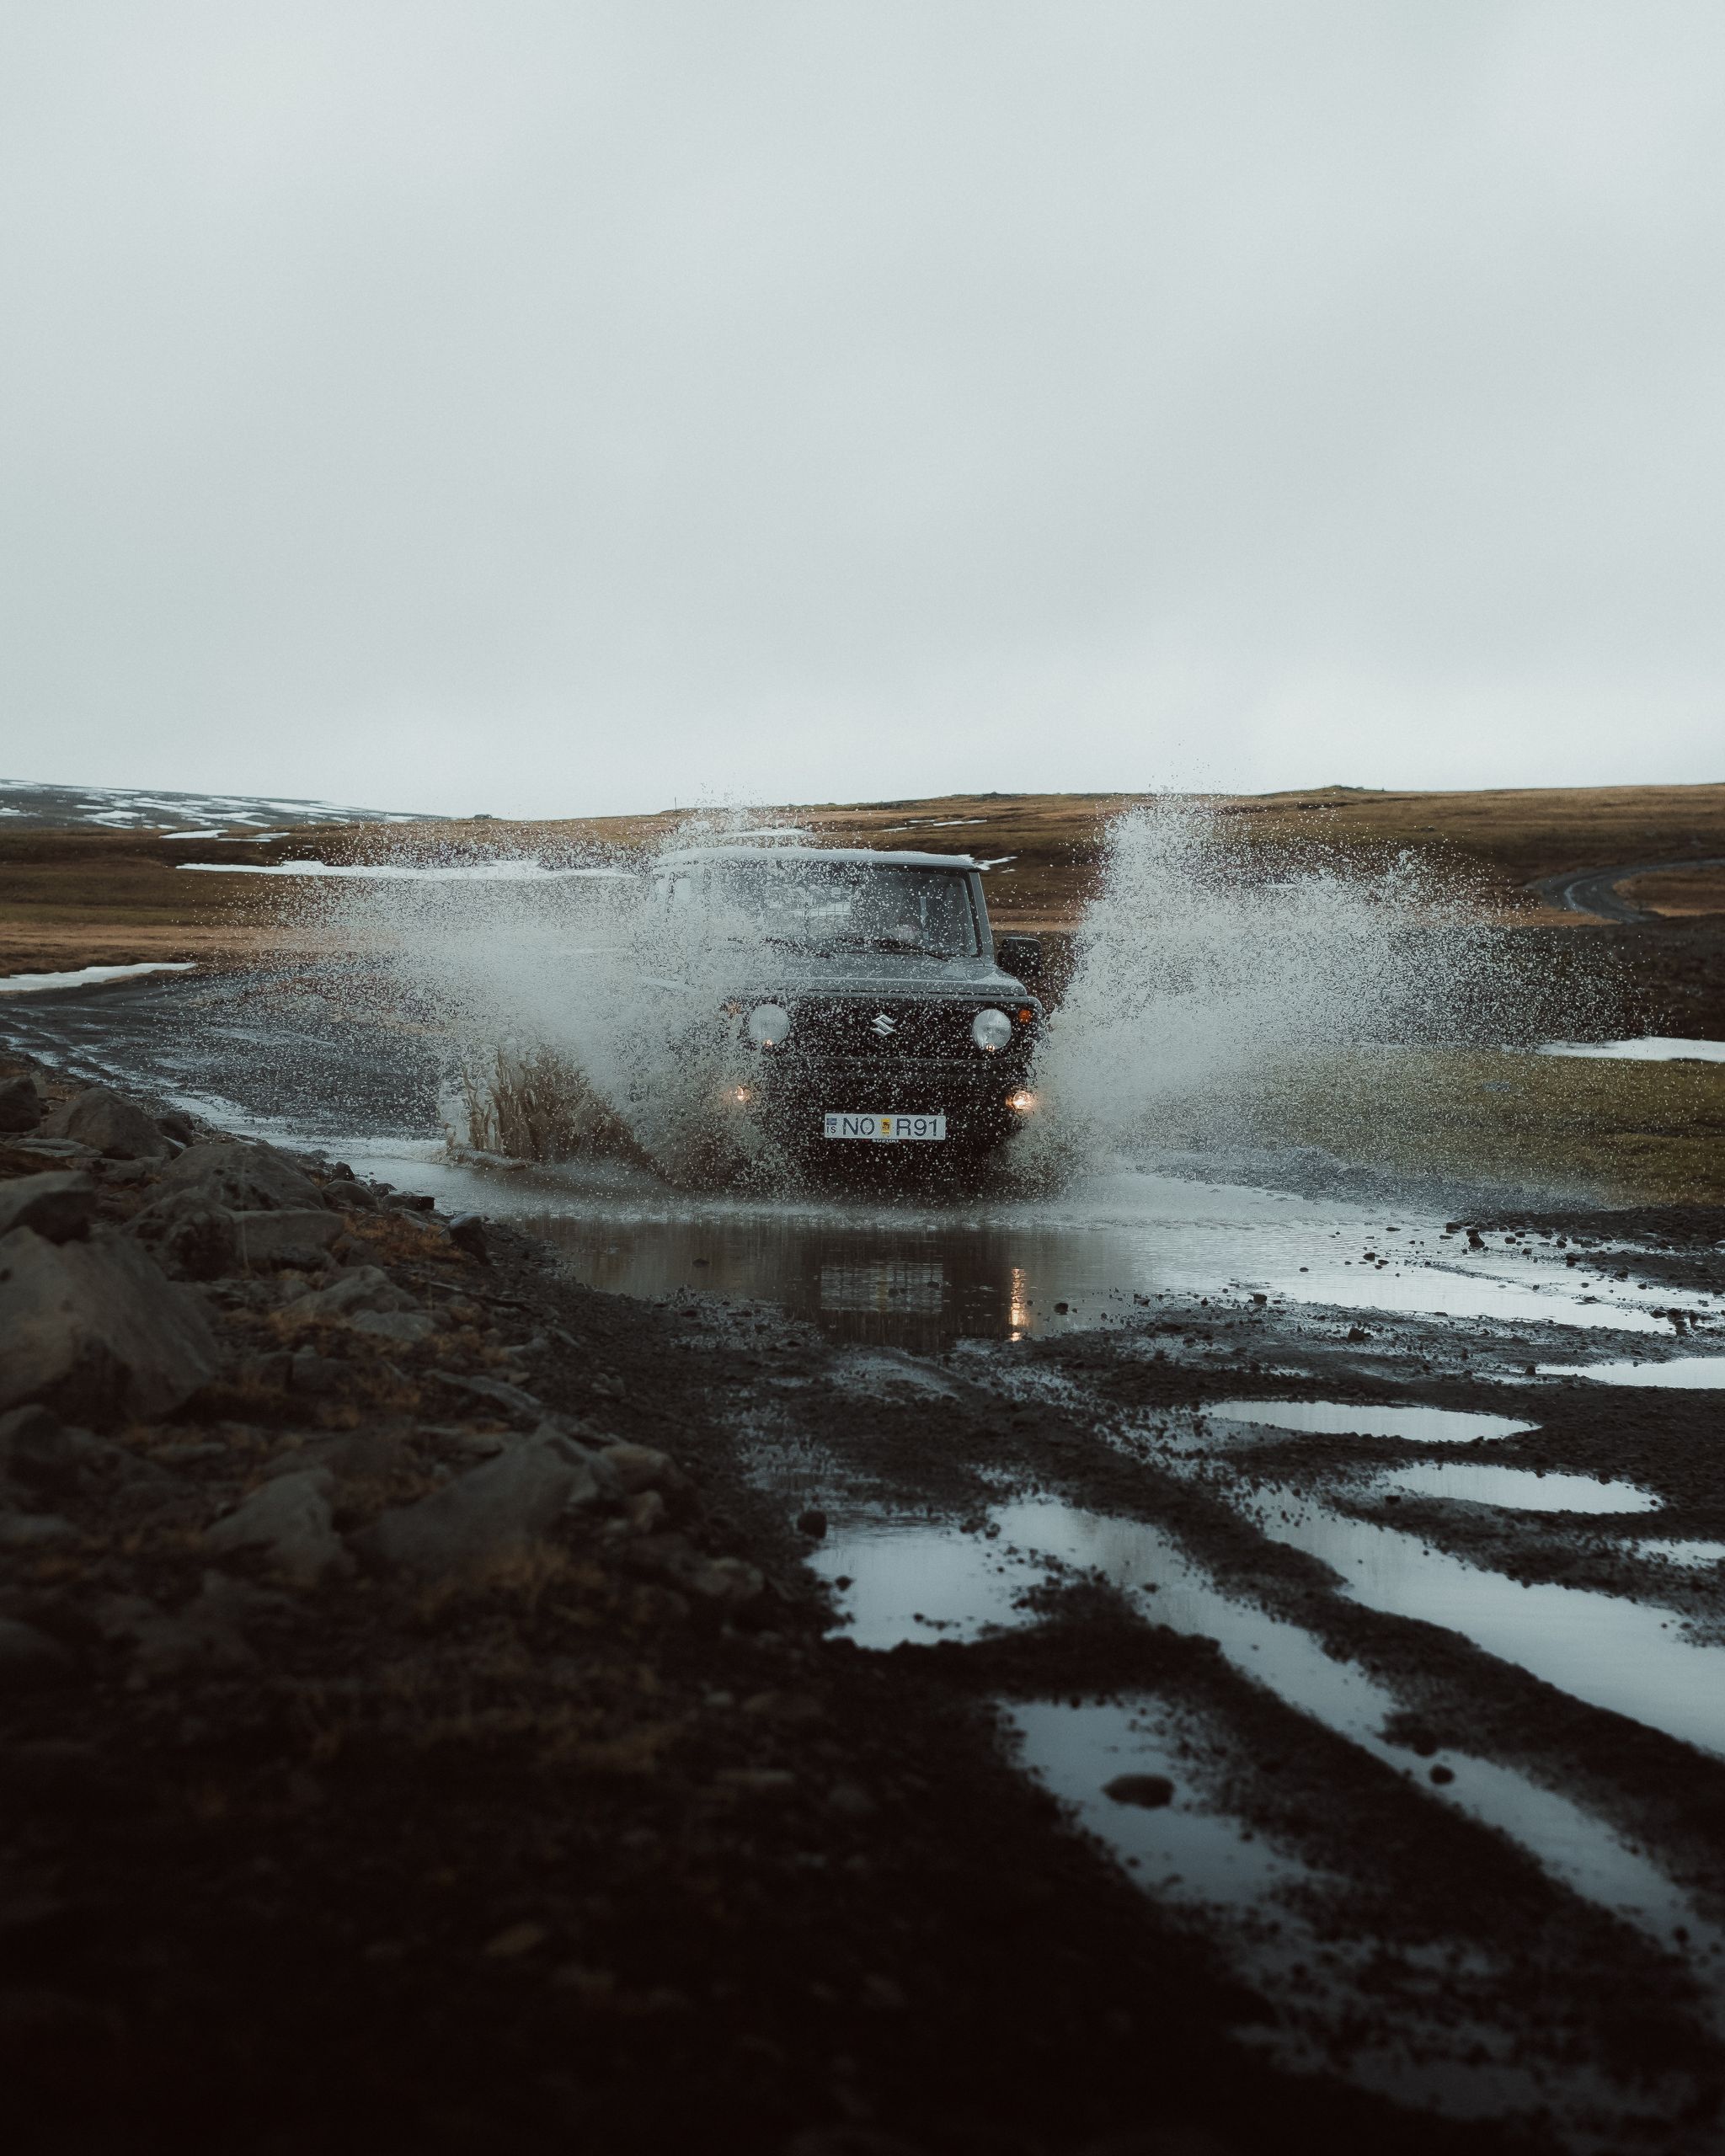 A compact size Suzuki Jimny  rental vehicle dynamically splashing through a puddle on iceland's f roads (highlands)